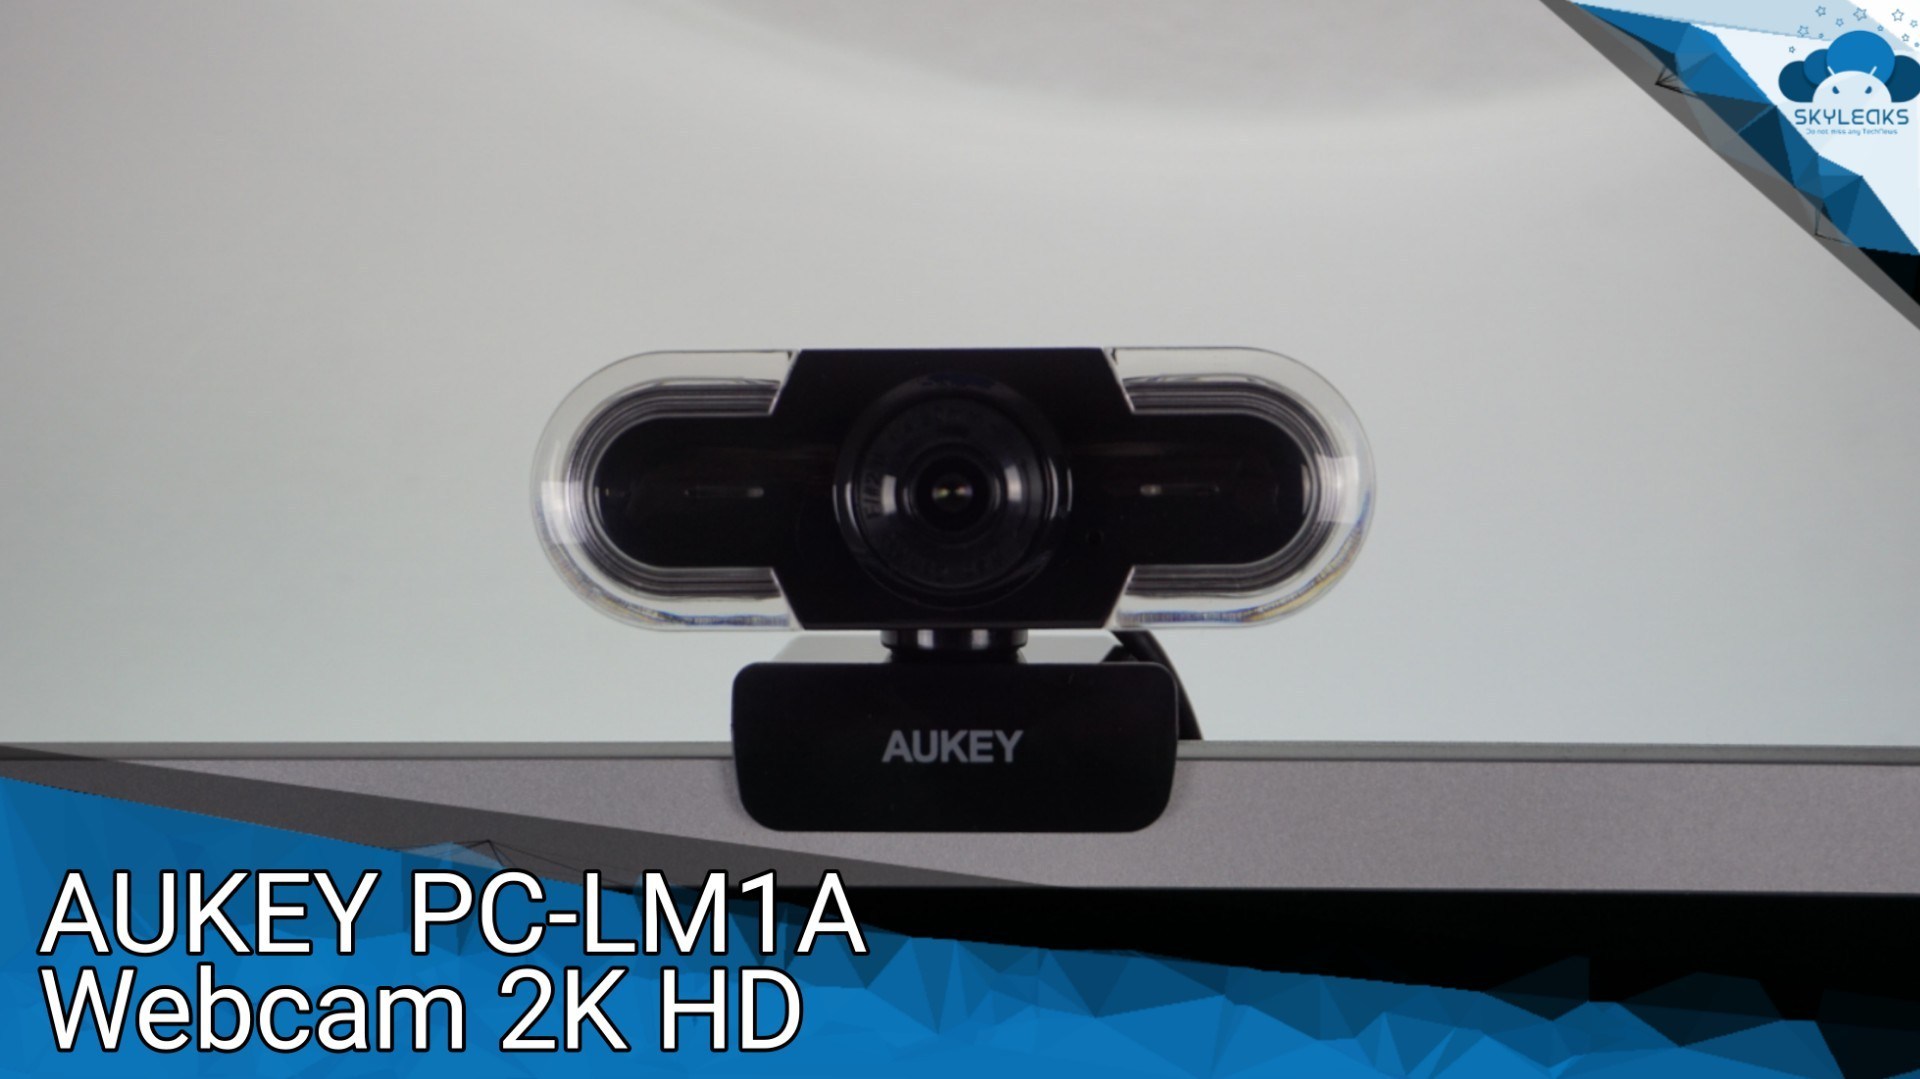 Aukey PC-LM1A Webcam